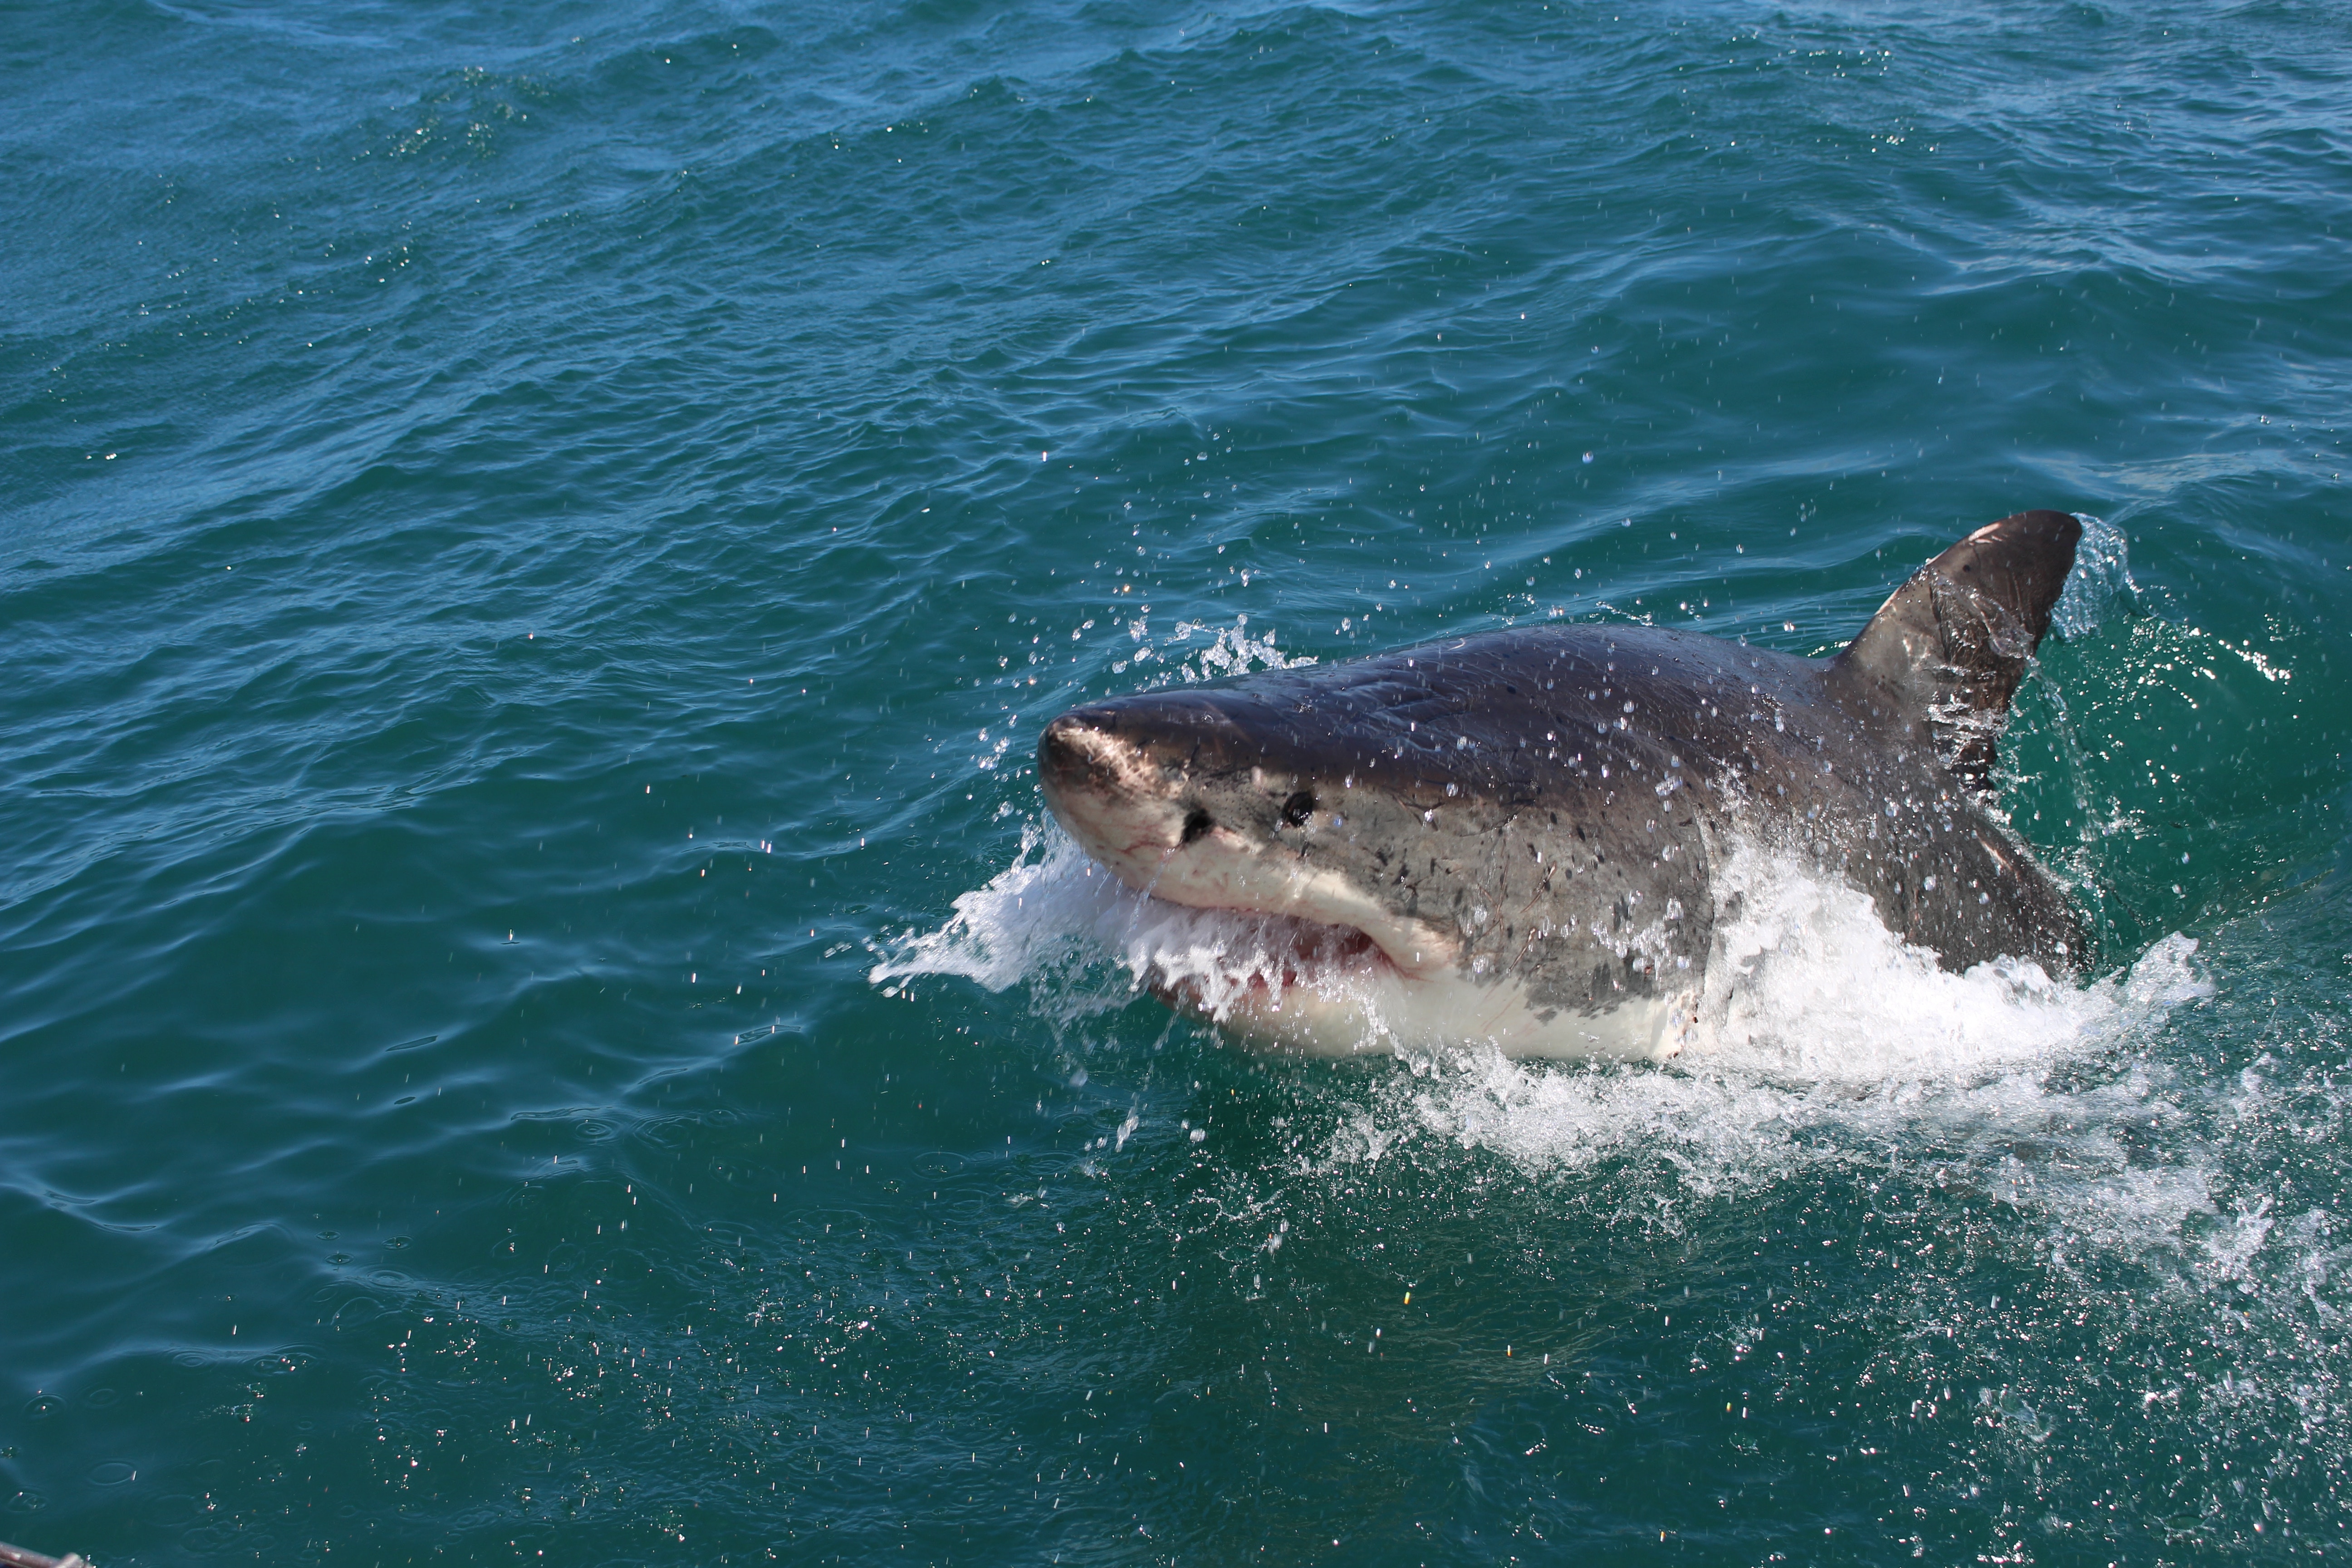 Great white shark mid-breach